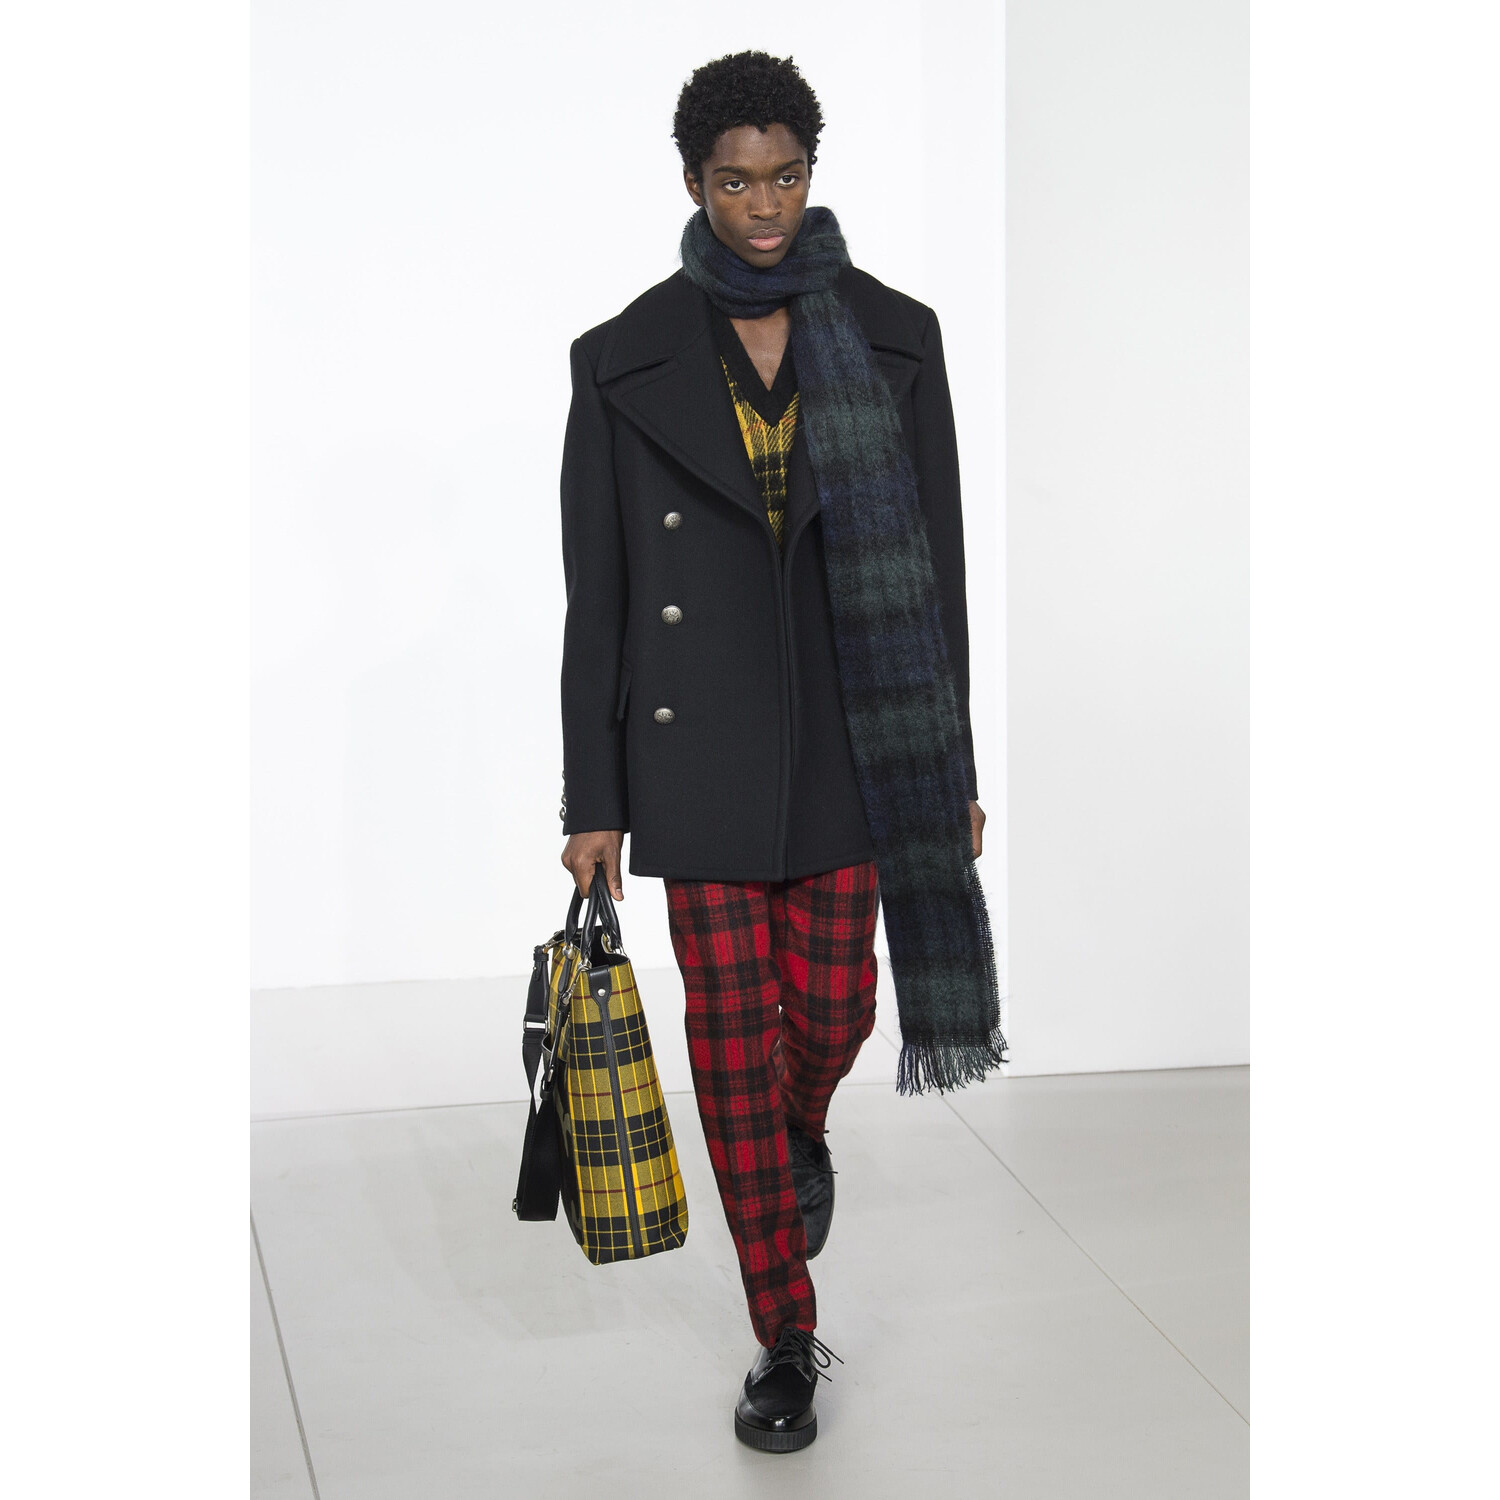 Фото Michael Kors Collection Fall 2018 Ready-to-Wear Майкл Корс осень зима 2018 коллекция неделя моды в Нью Йорке Mainstyles